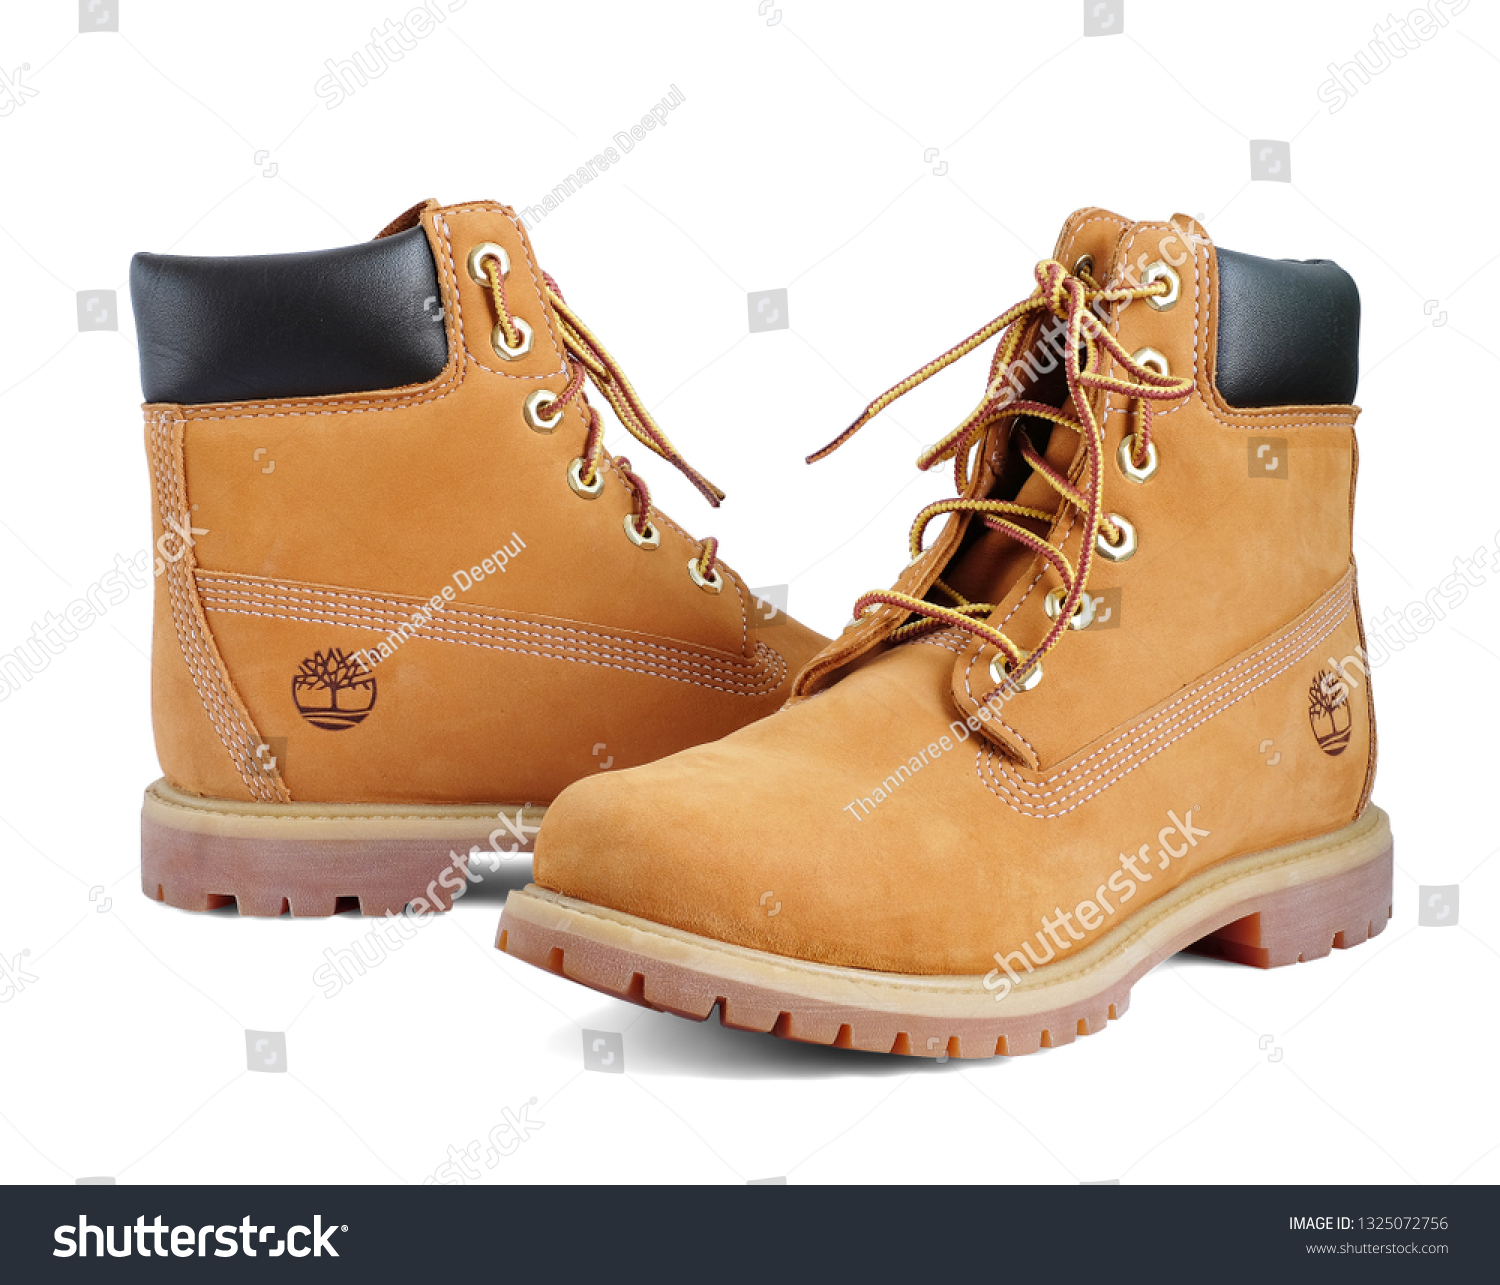 2019 timberland boots